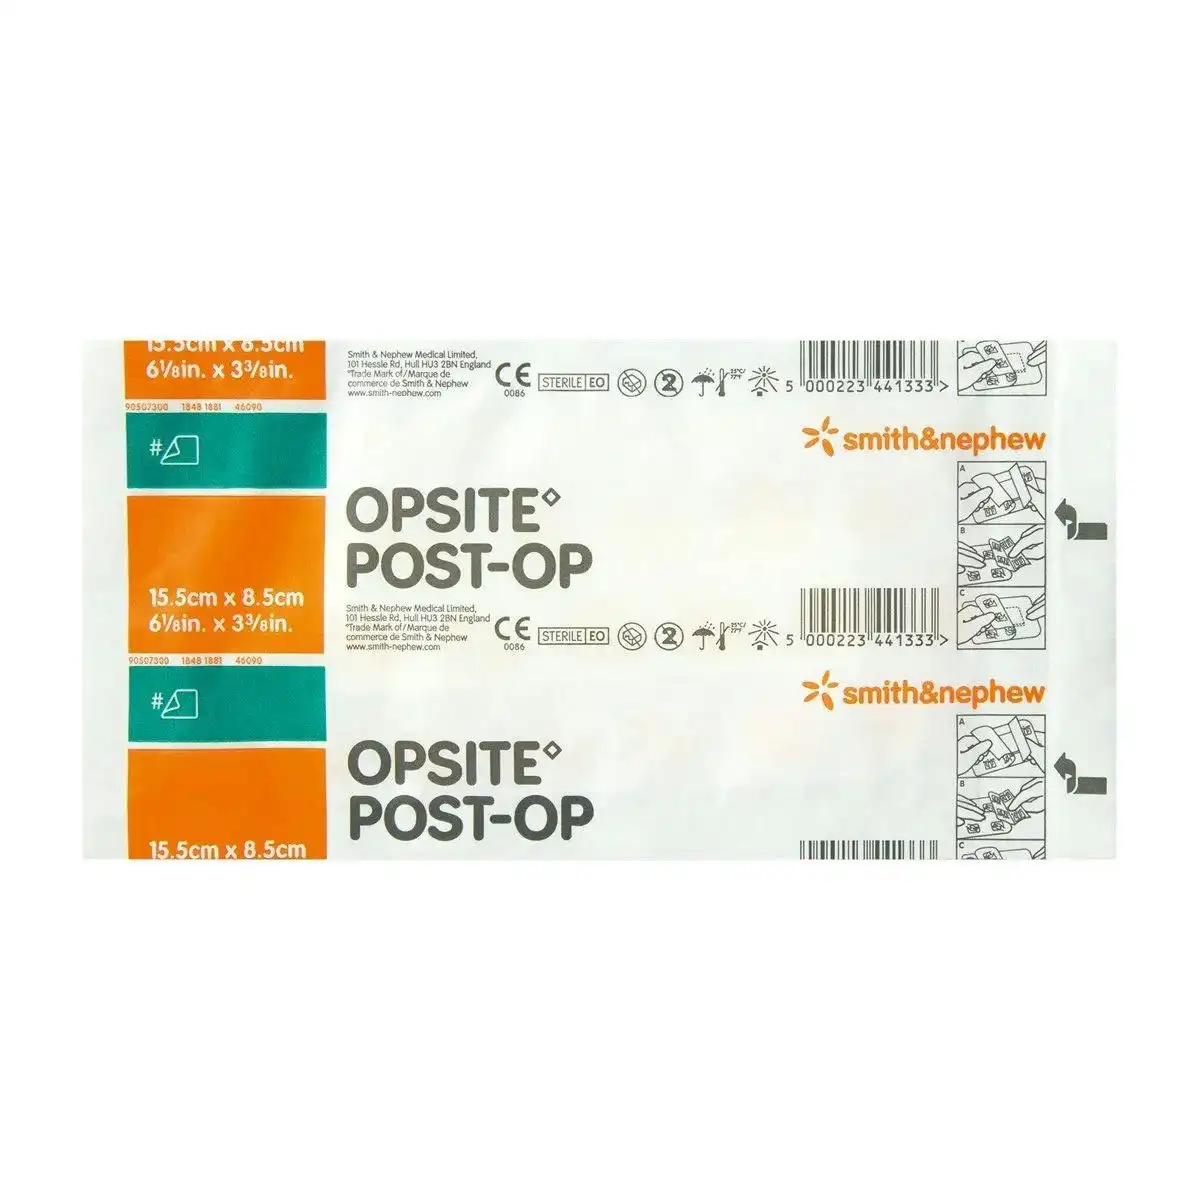 OPSITE Post-Op 15.5cm x 8.5cm - Single Dressing (1 Pack)